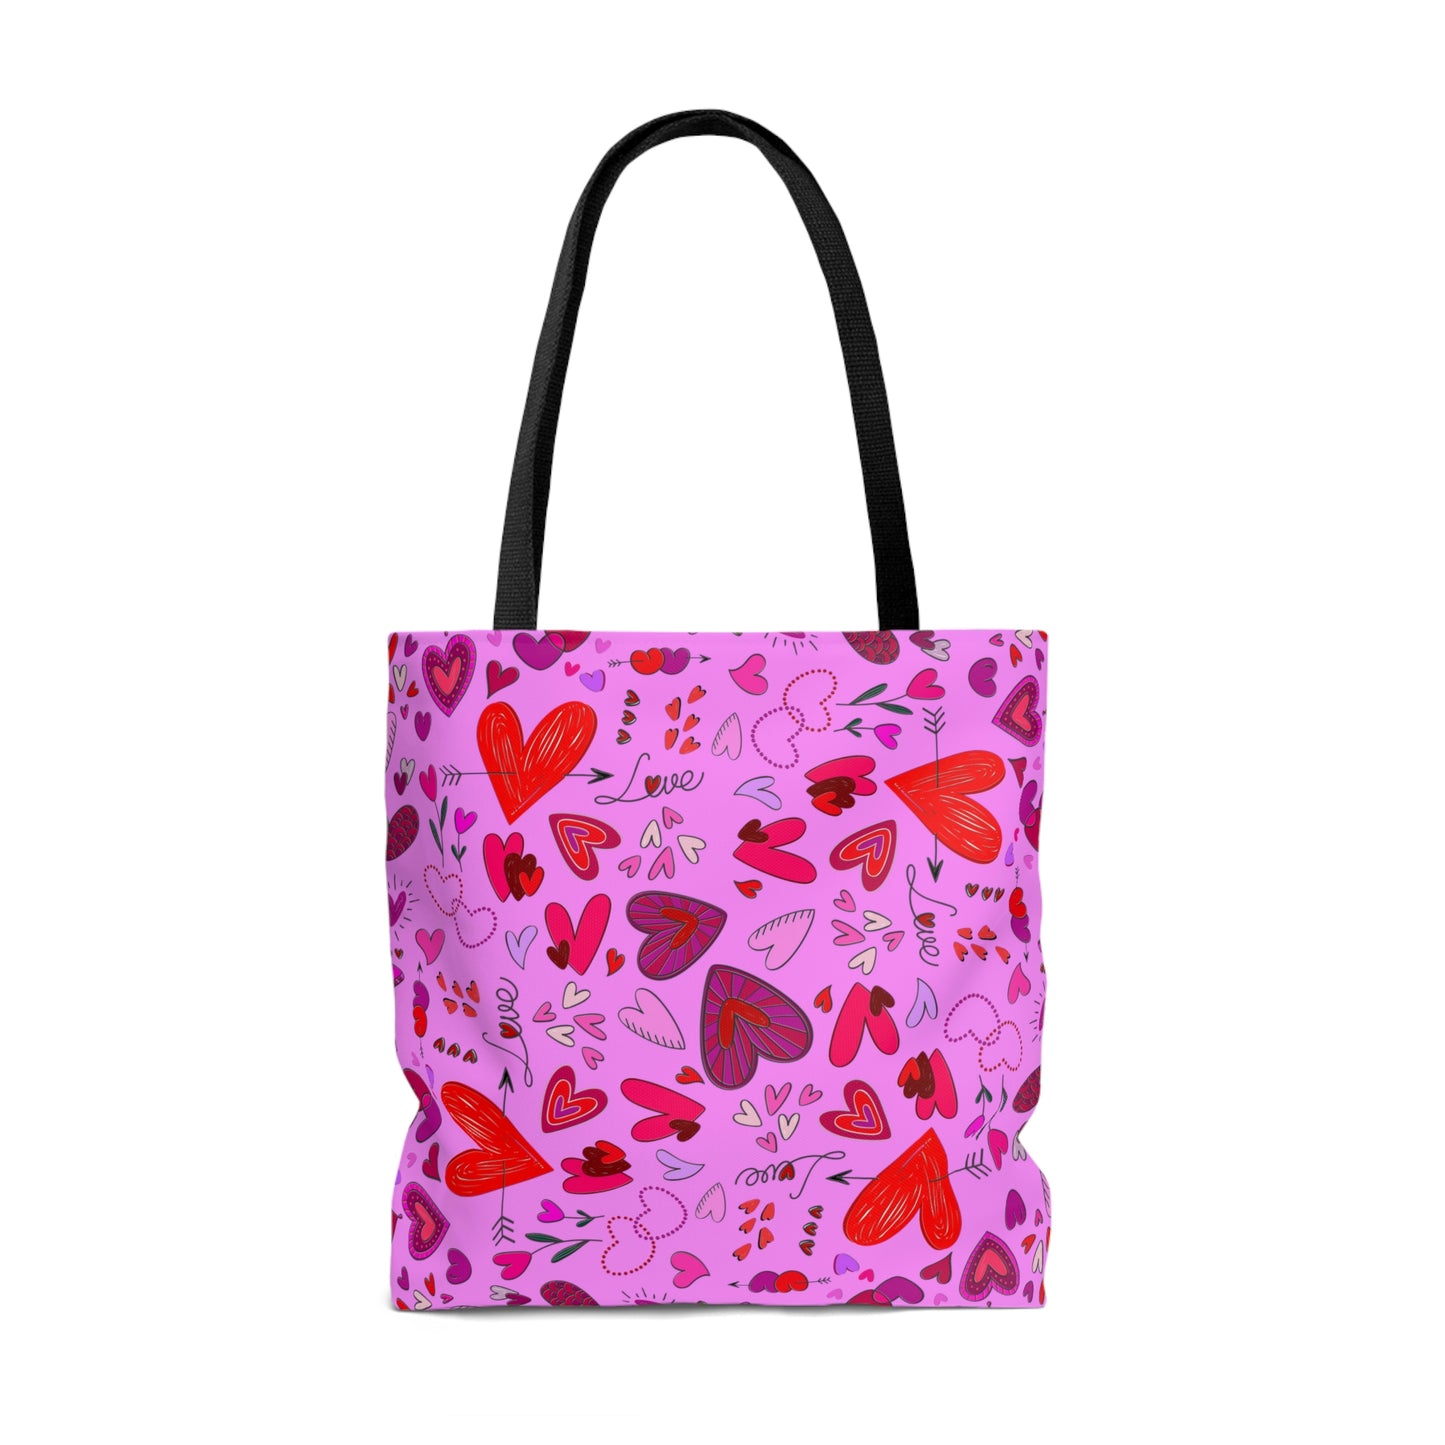 Heart Doodles - Fuschia Pink ff8eff - Tote Bag